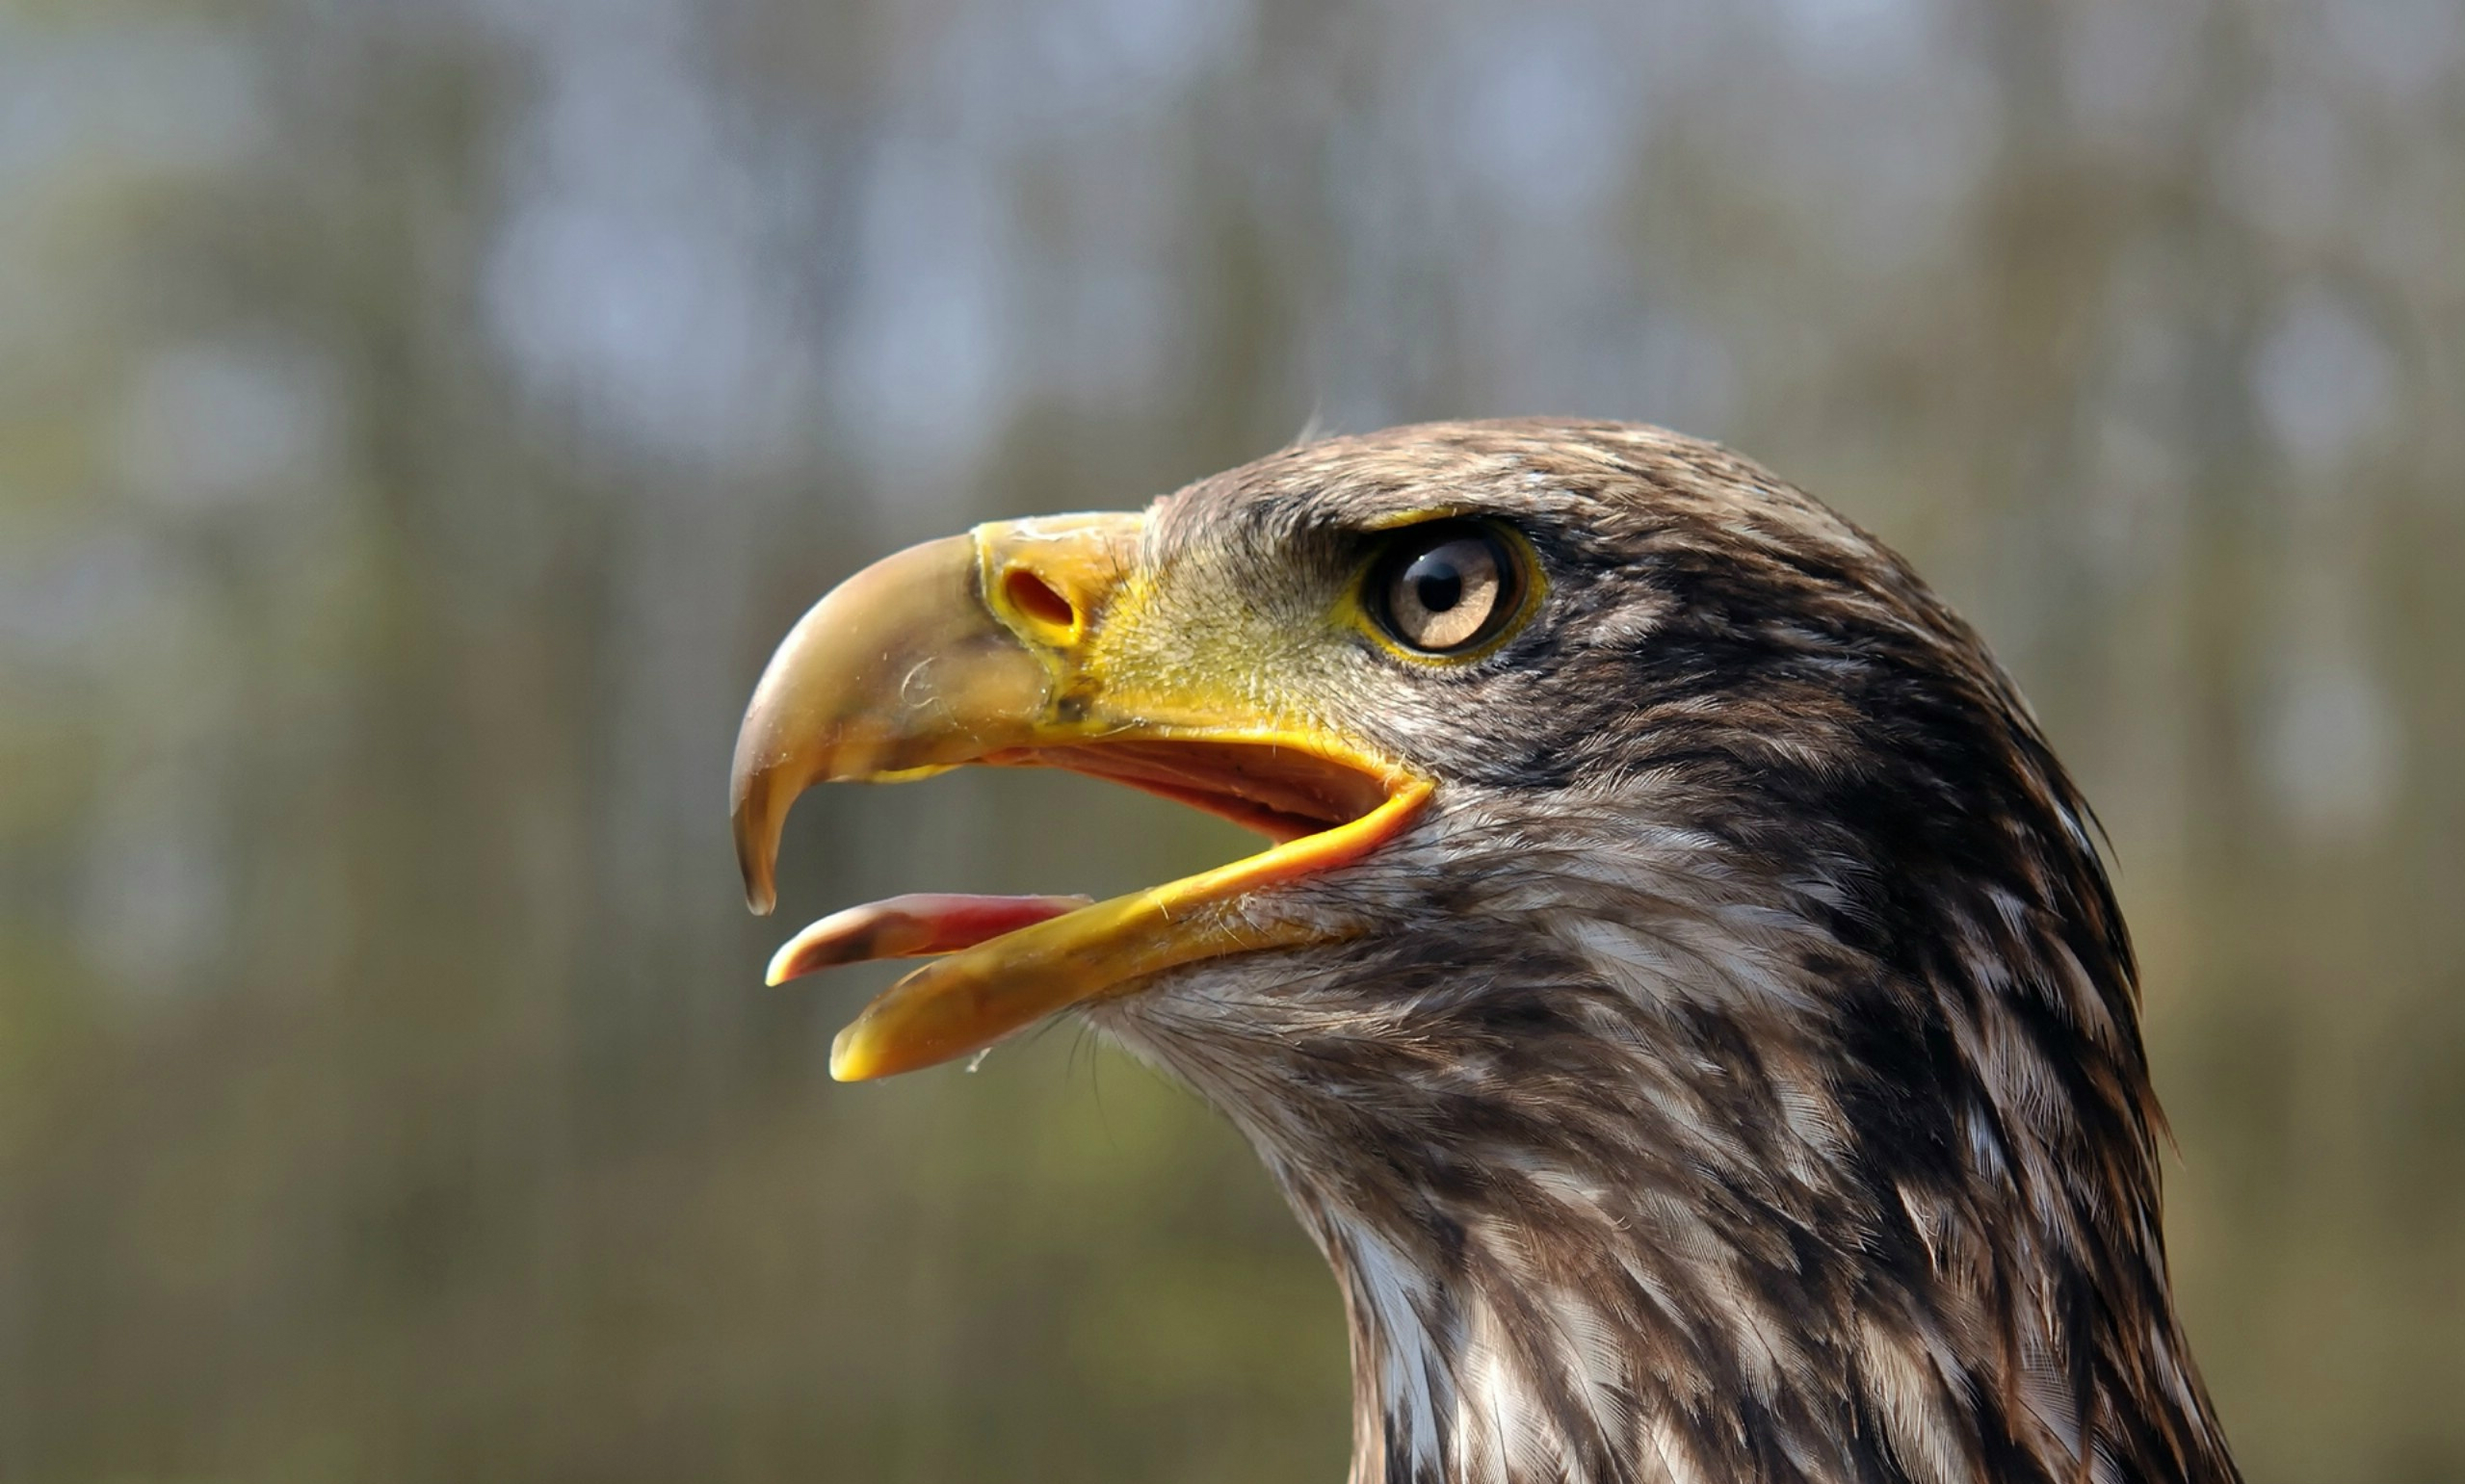 Majestic eagle soaring against a vibrant background.